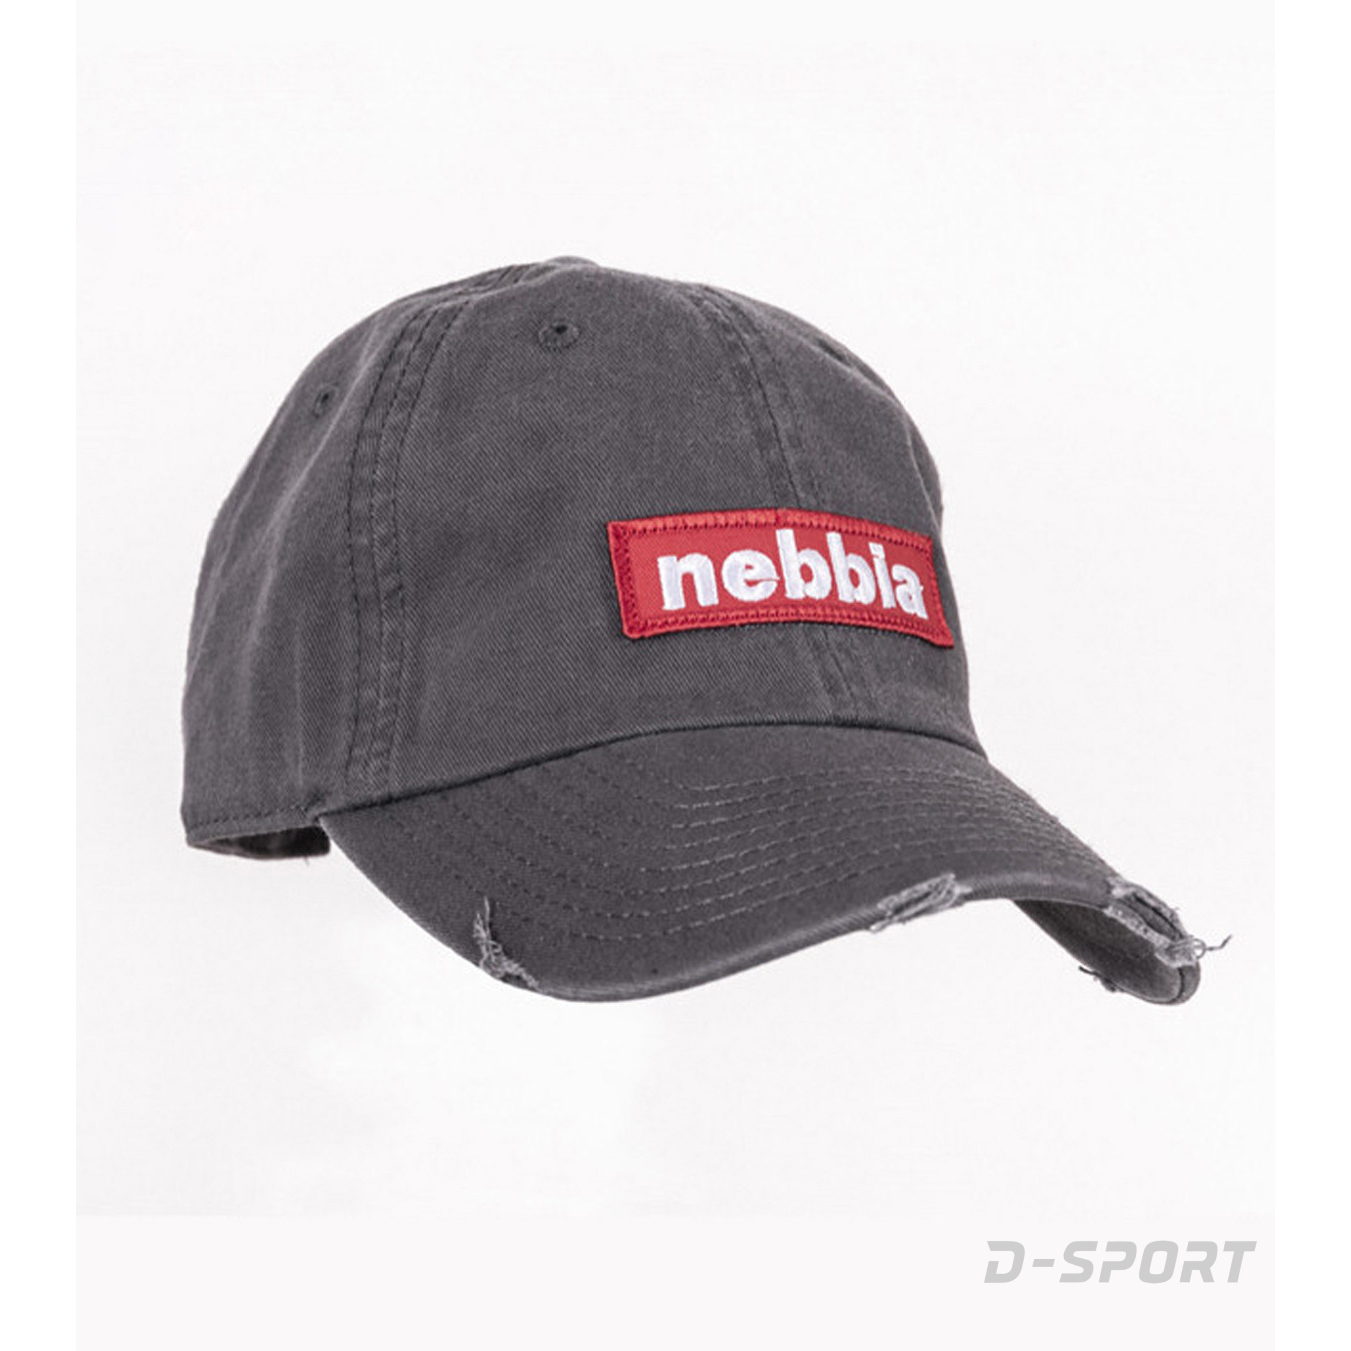 NEBBIA Red Label cap